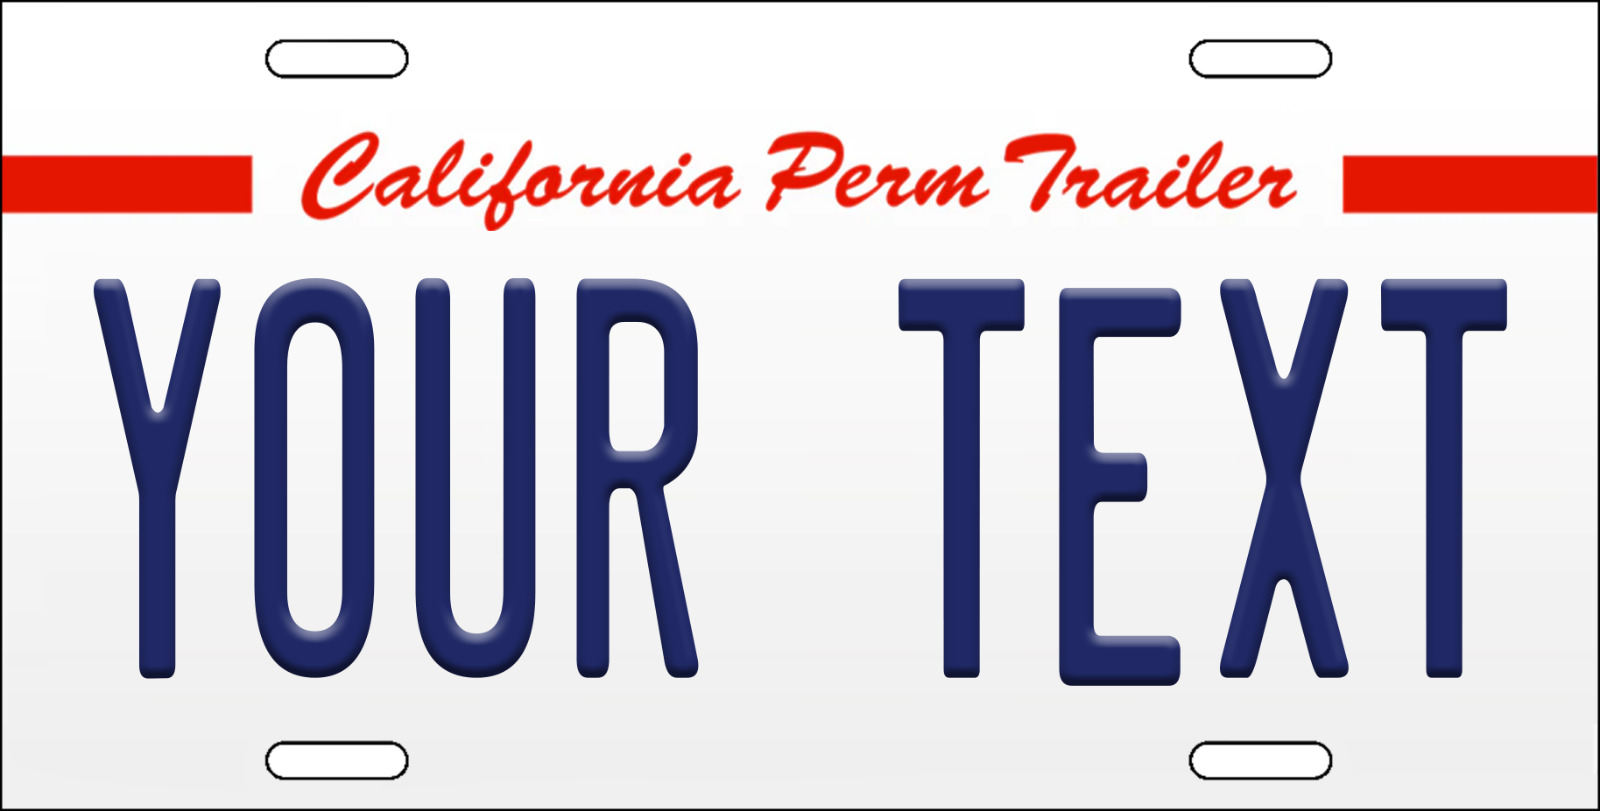 CALIFORNIA PERM TRAILER PERSONALIZED License Plate CUSTOM ADD TEXT